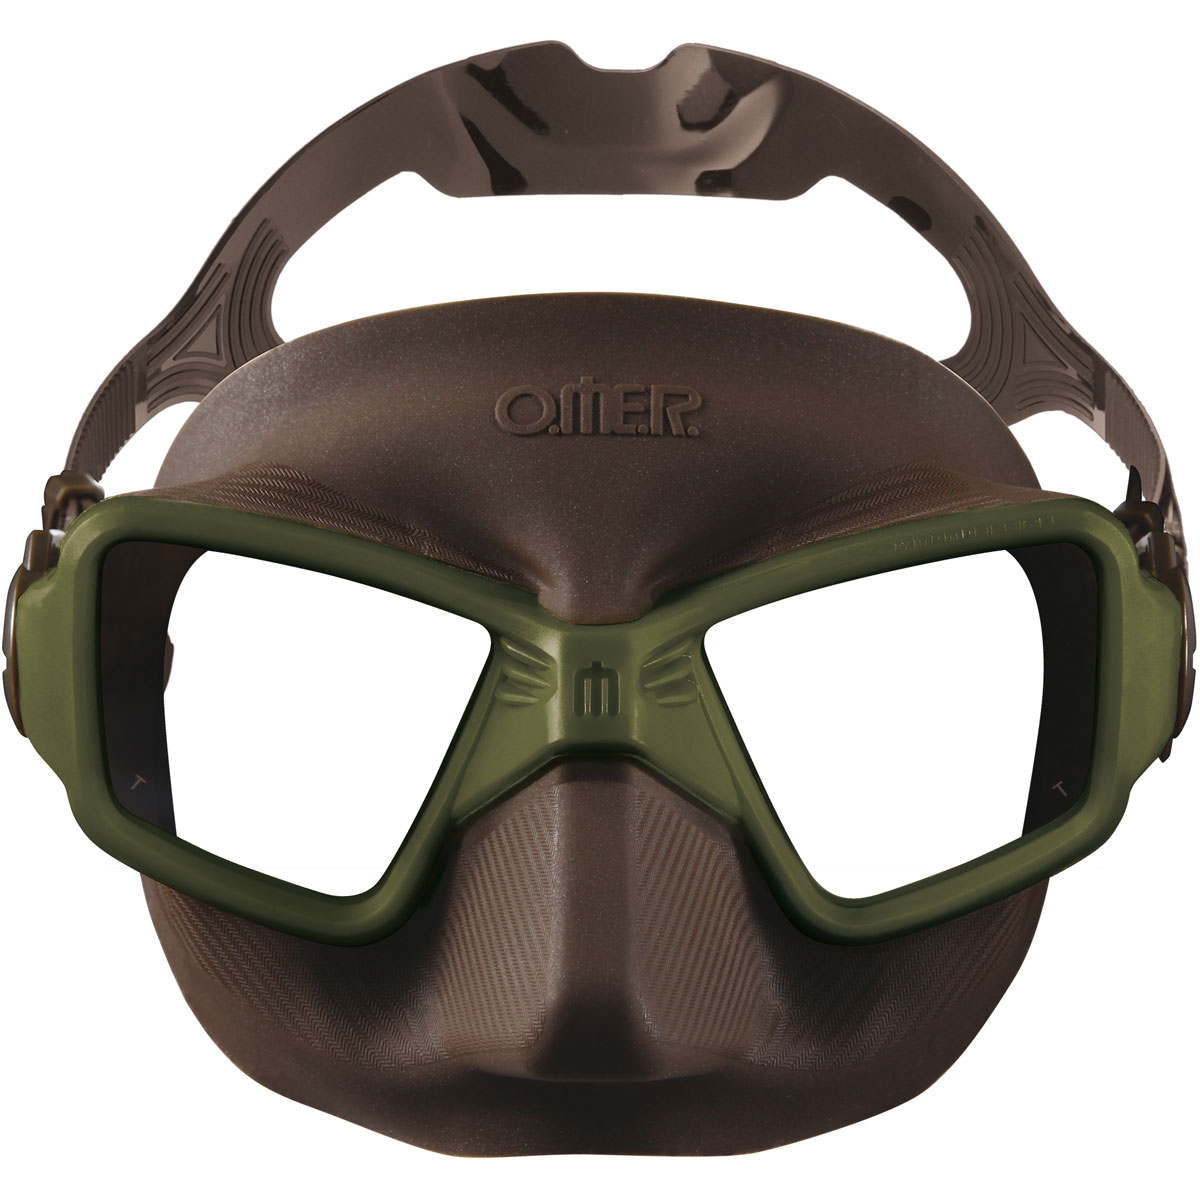 The Omer Zero 3 Mask